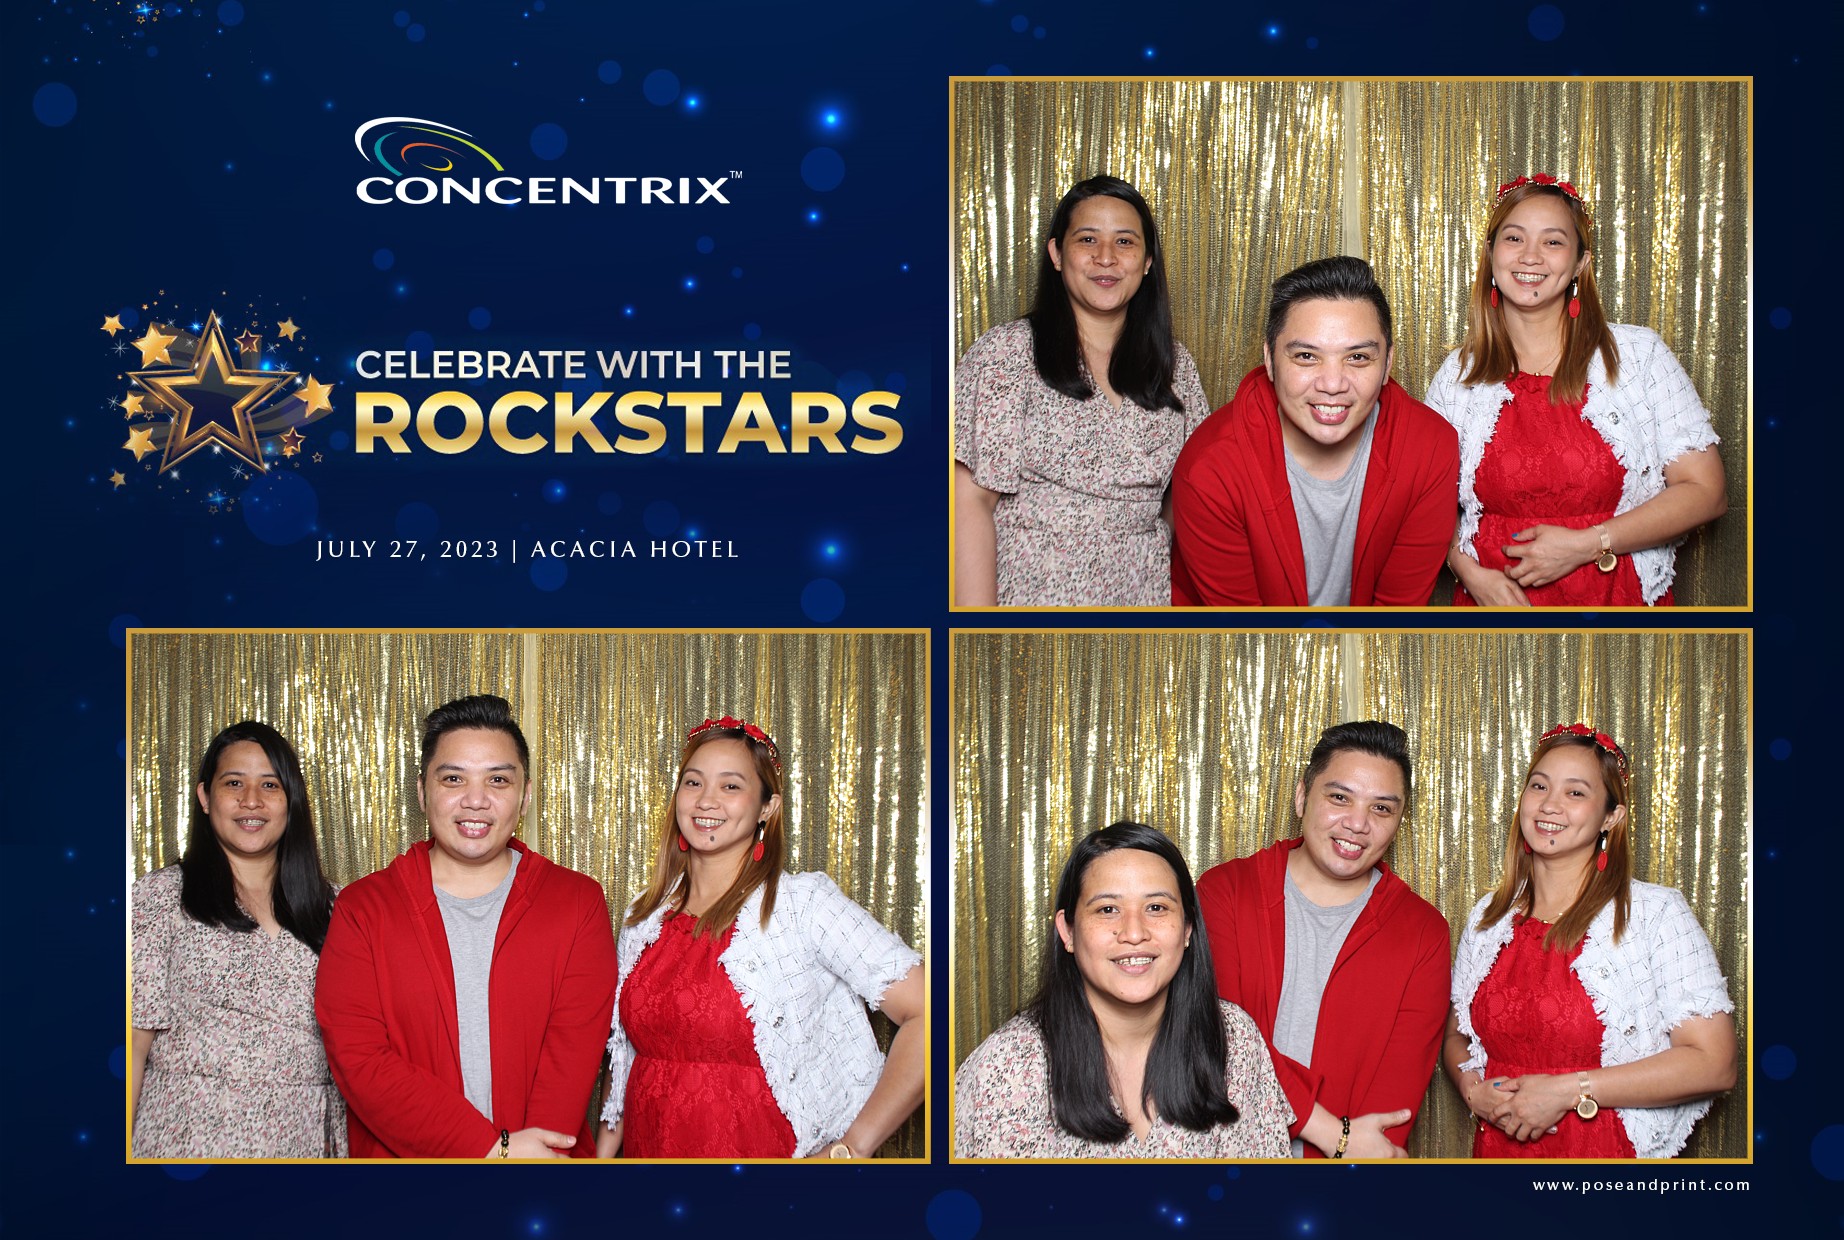 Concentrix Celebrate with the Rockstars